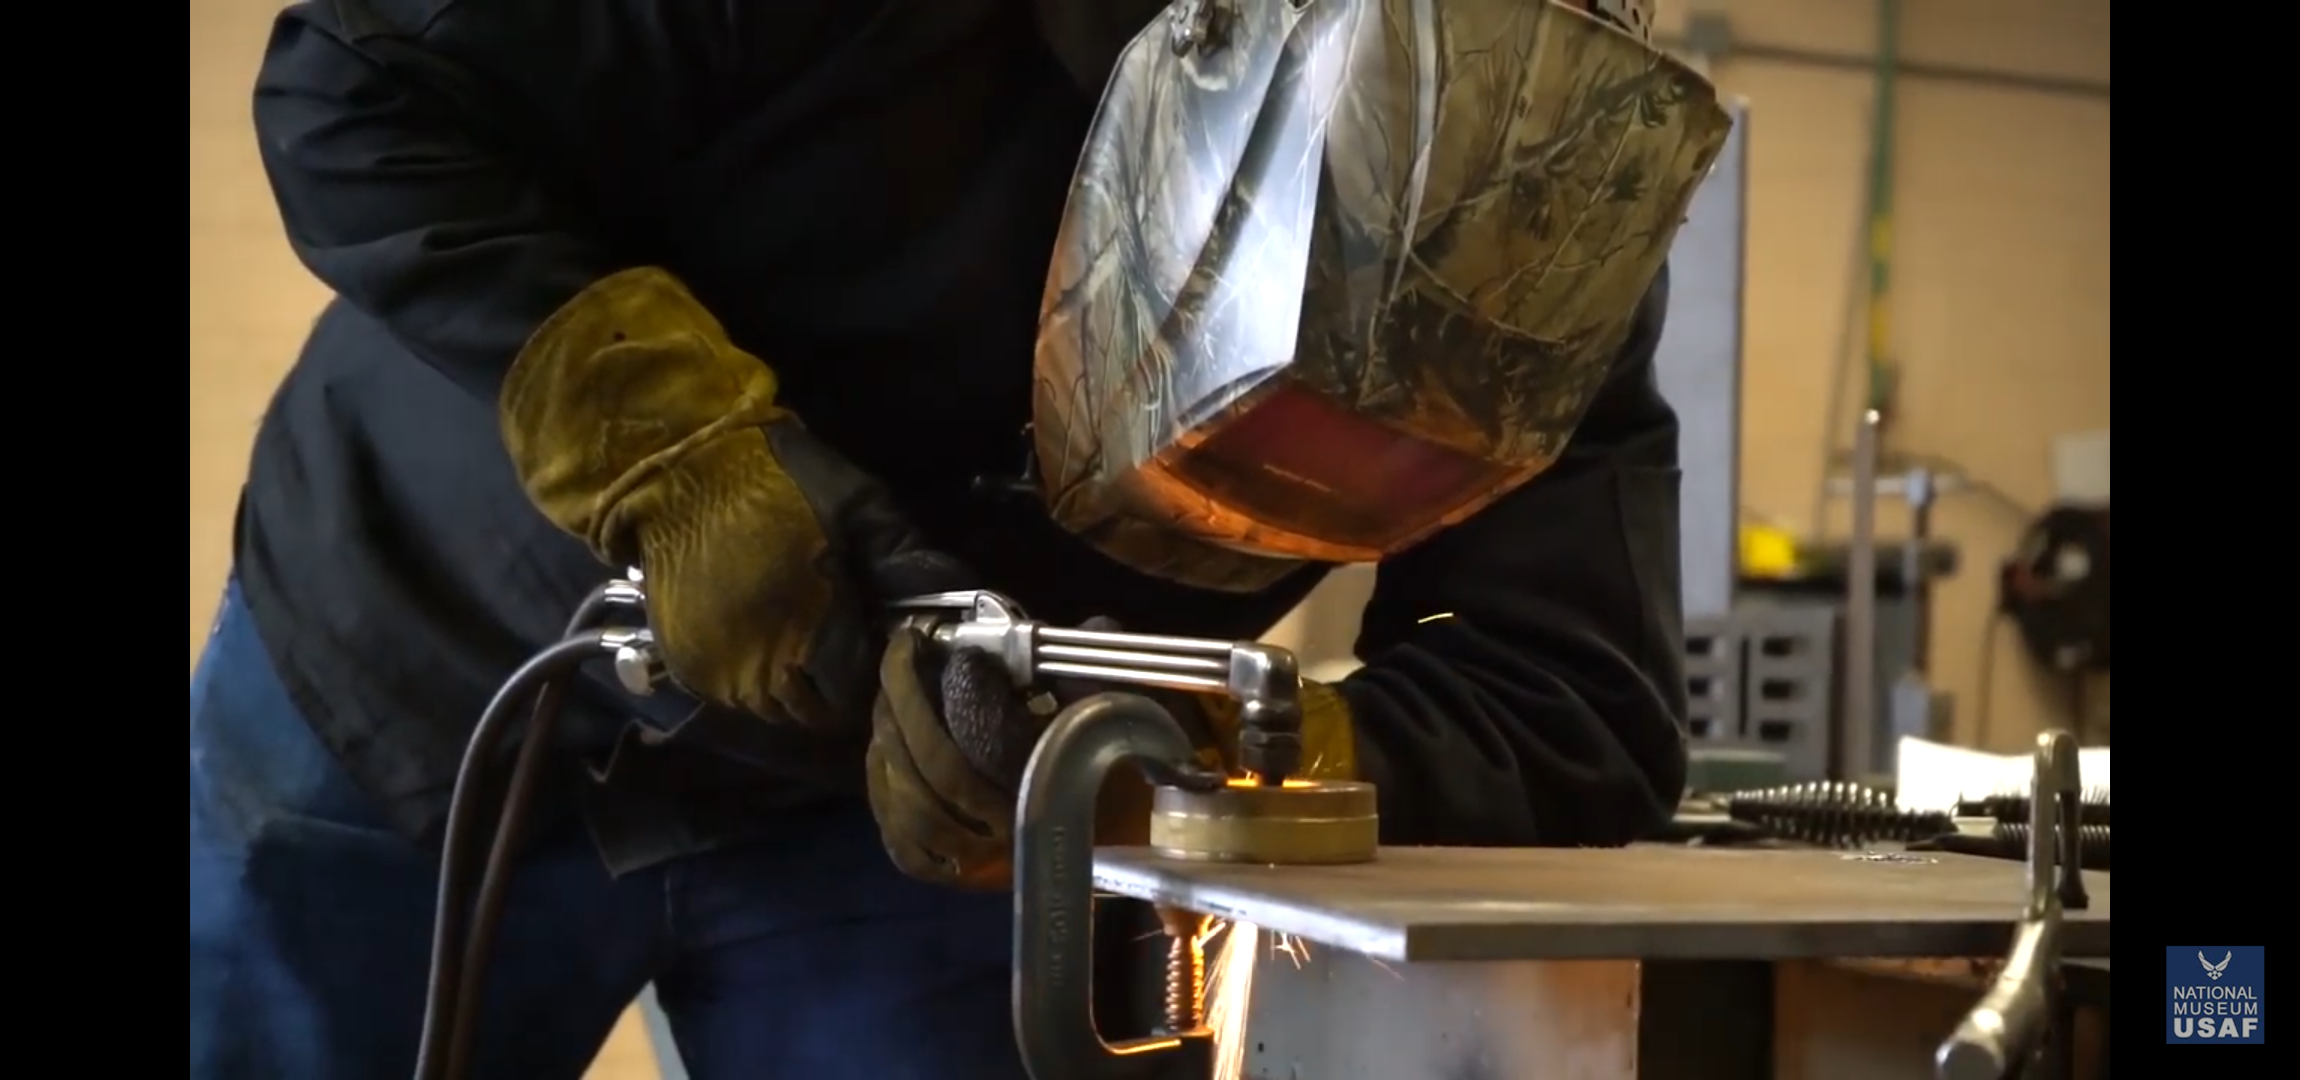 Image from video of worker welding to create exhibit display